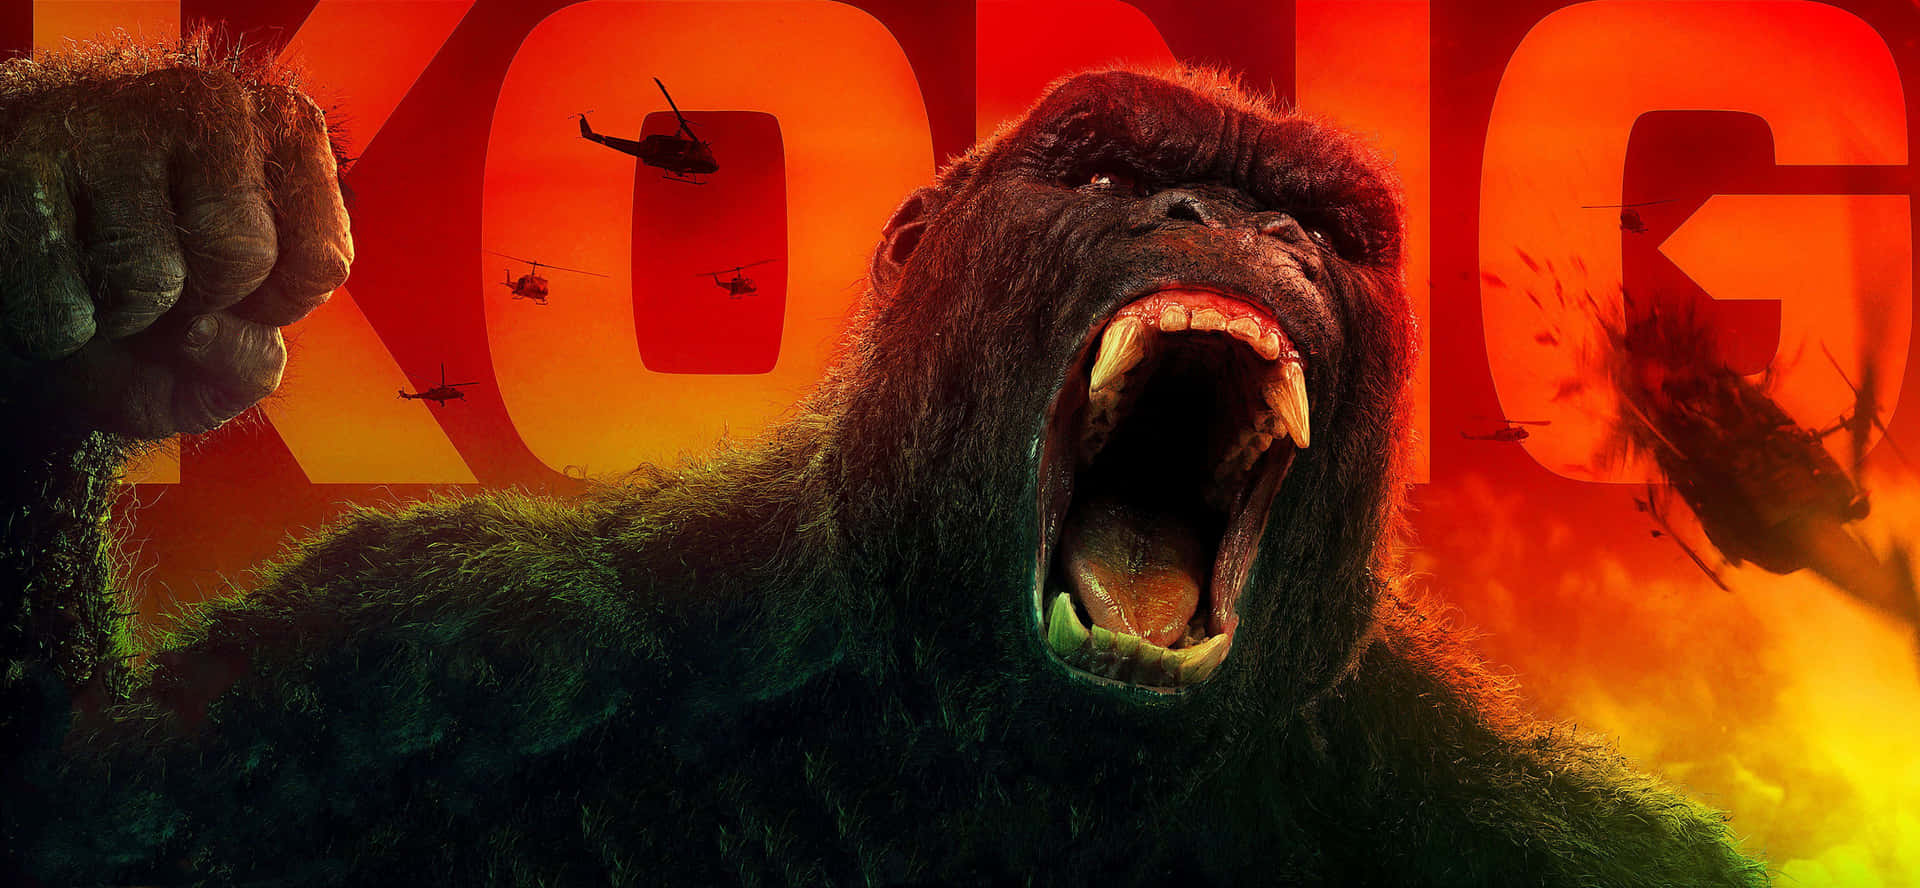 Caption: King Kong Roaring: The Mighty Protector Of Skull Island